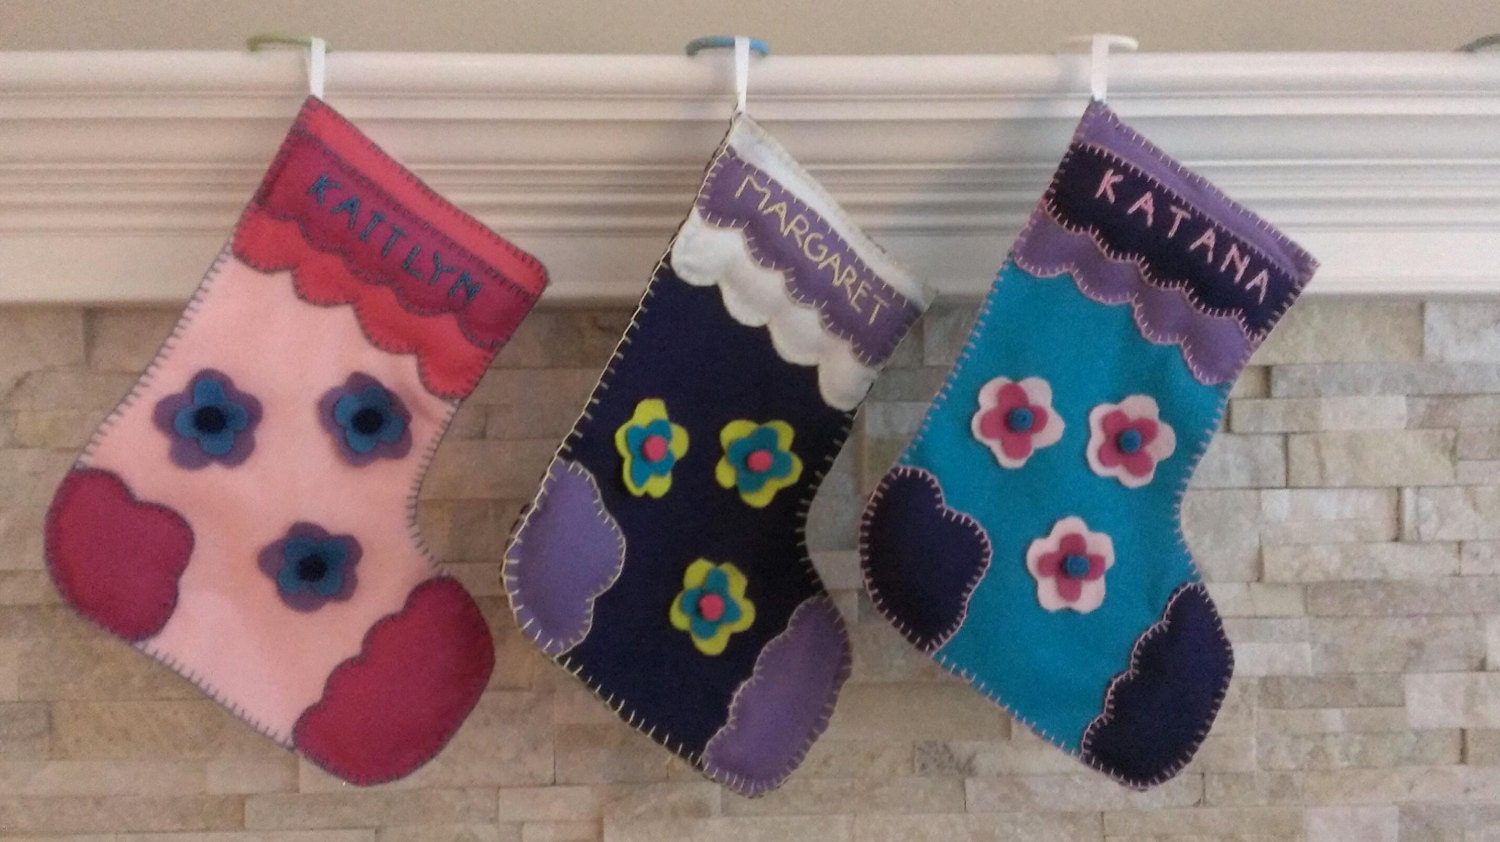 Christmas stockings set of 3 - felt stockings Christmas decorations - personalized stockings